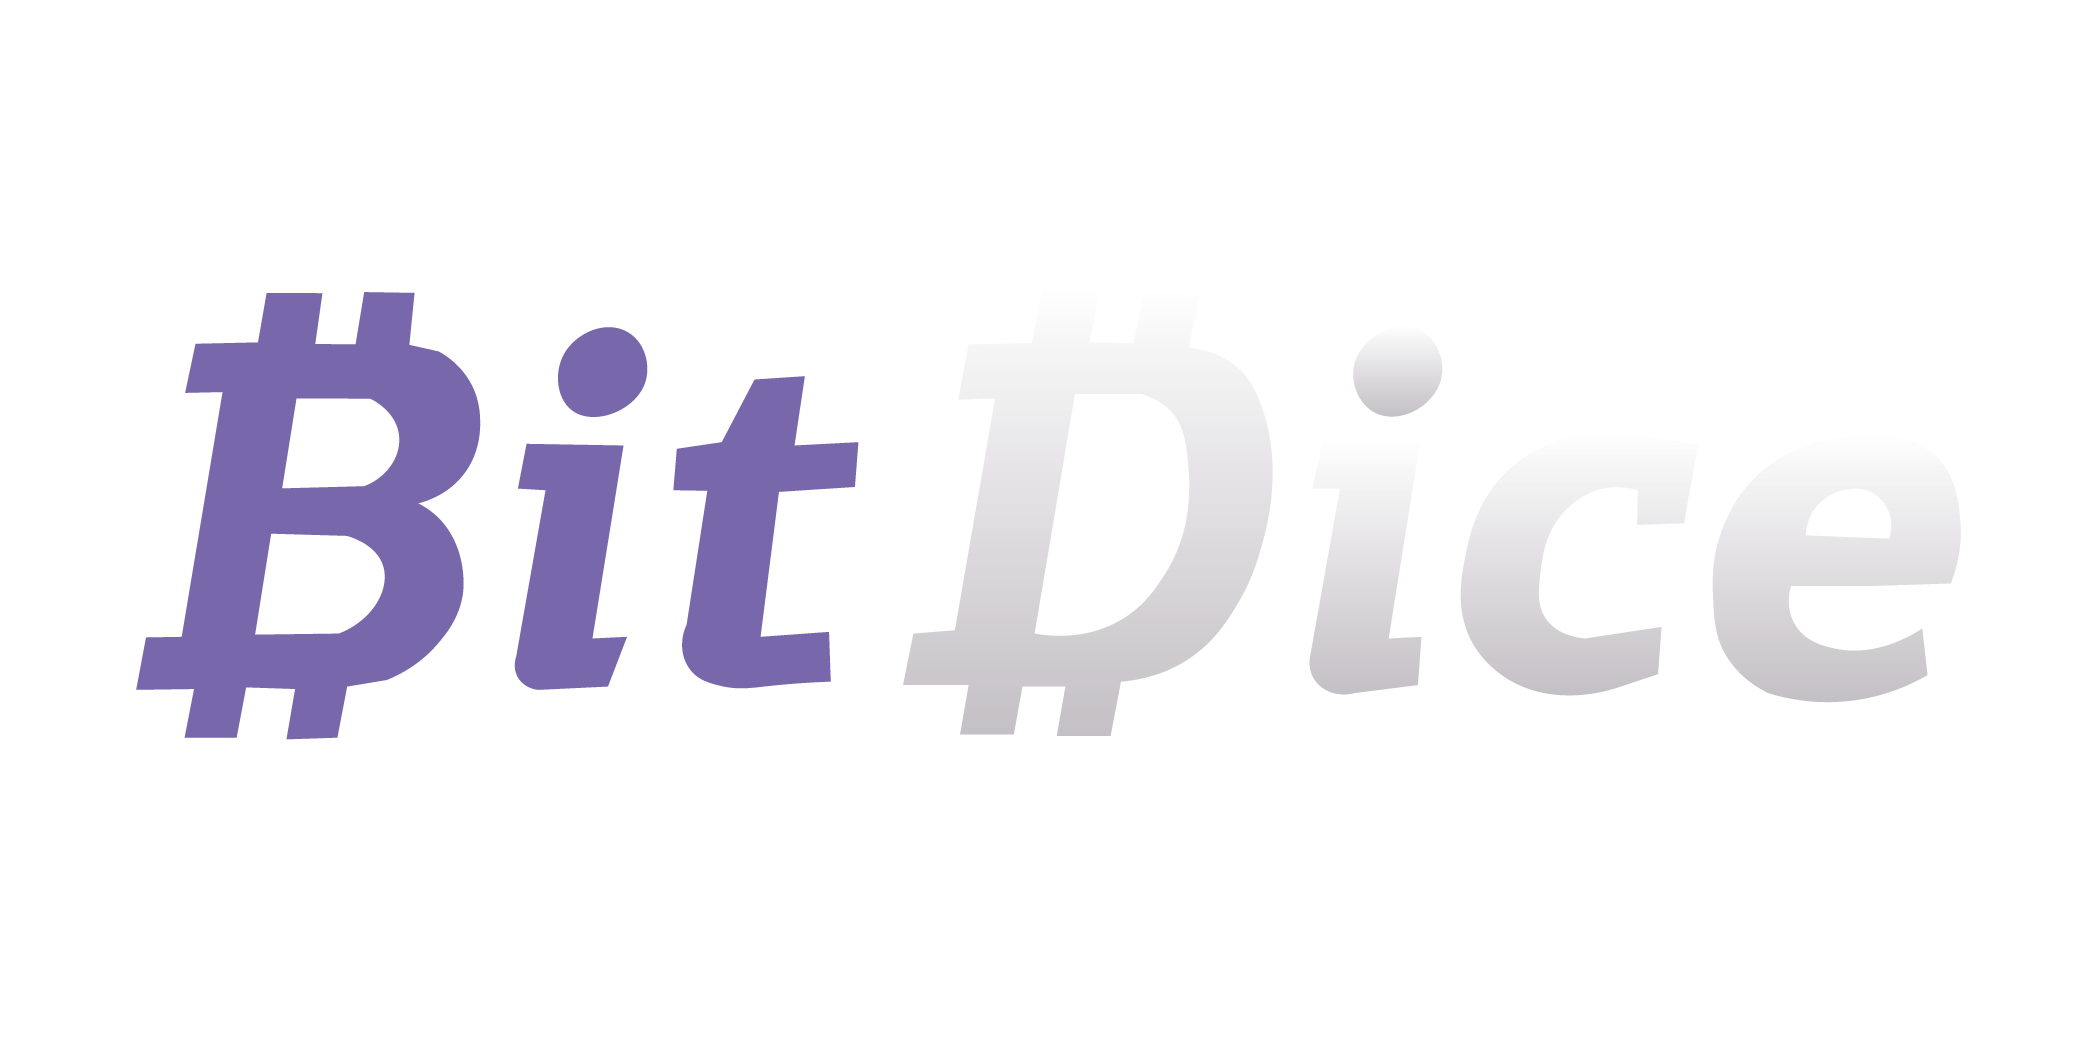 BitDice